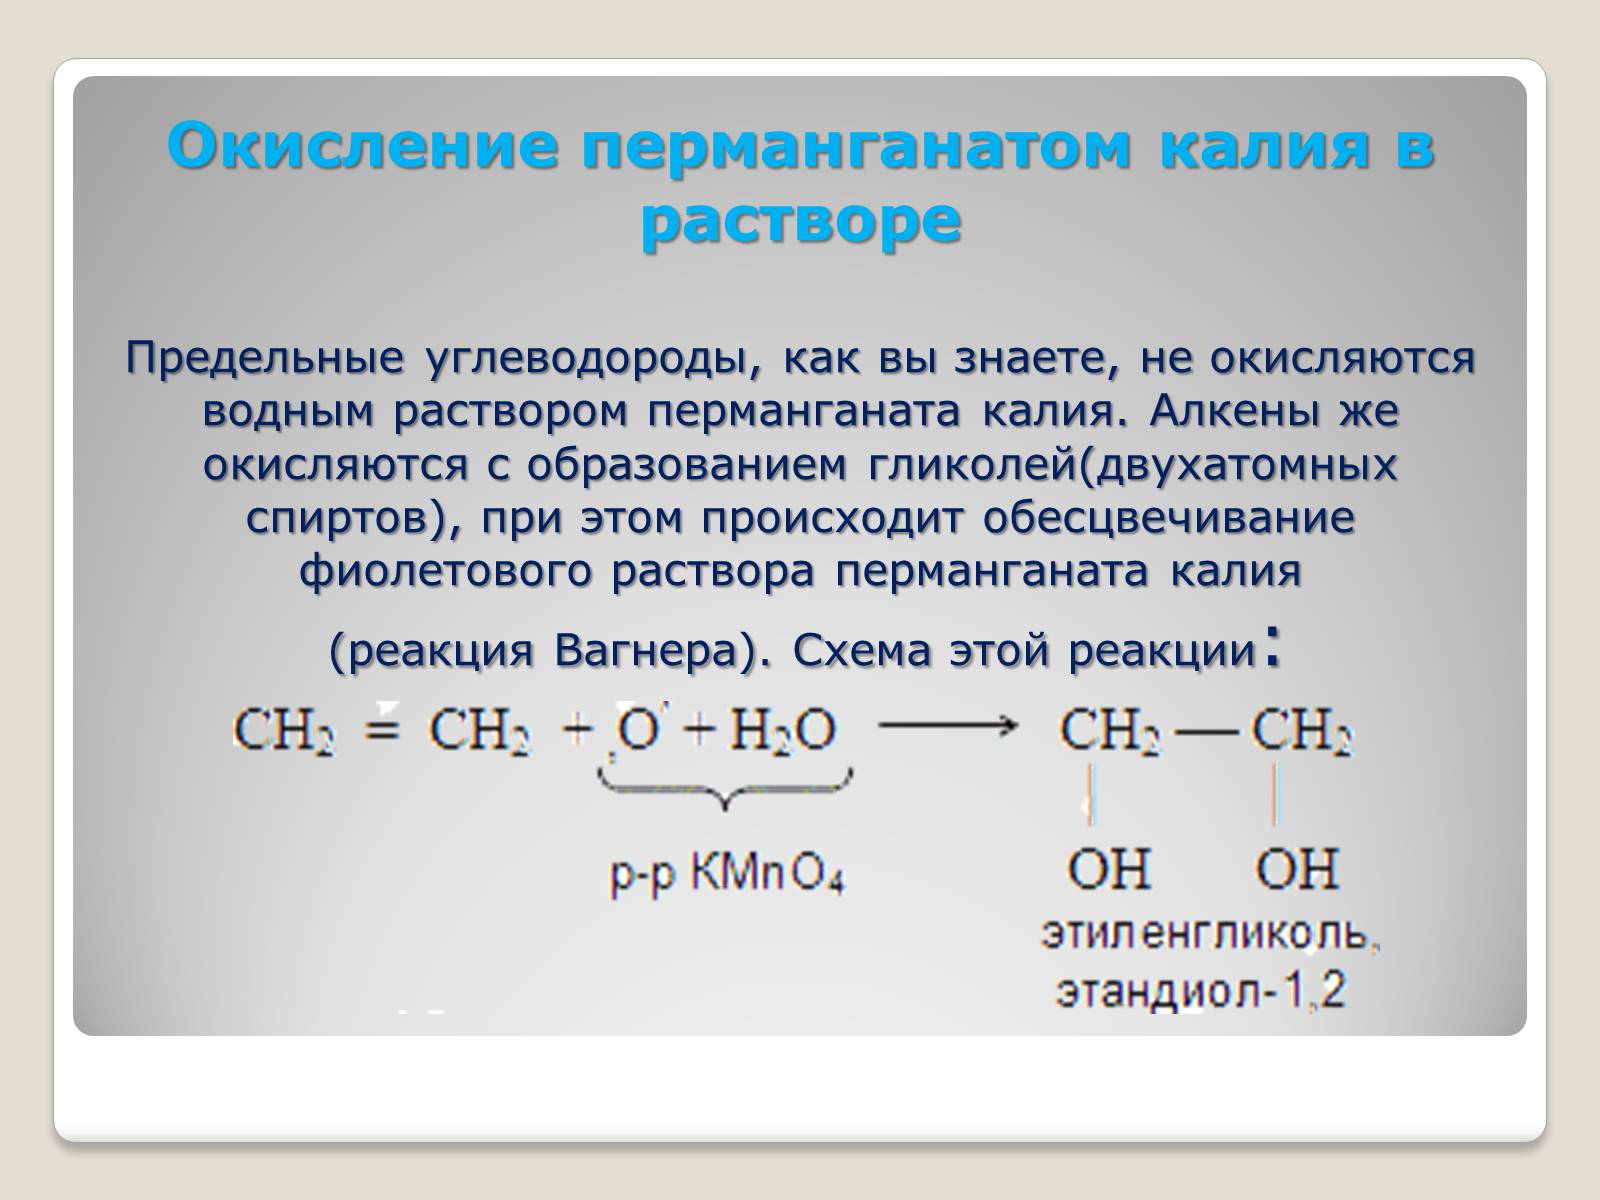 Презентація на тему «Химические свойства и применение алкенов» - Слайд #10